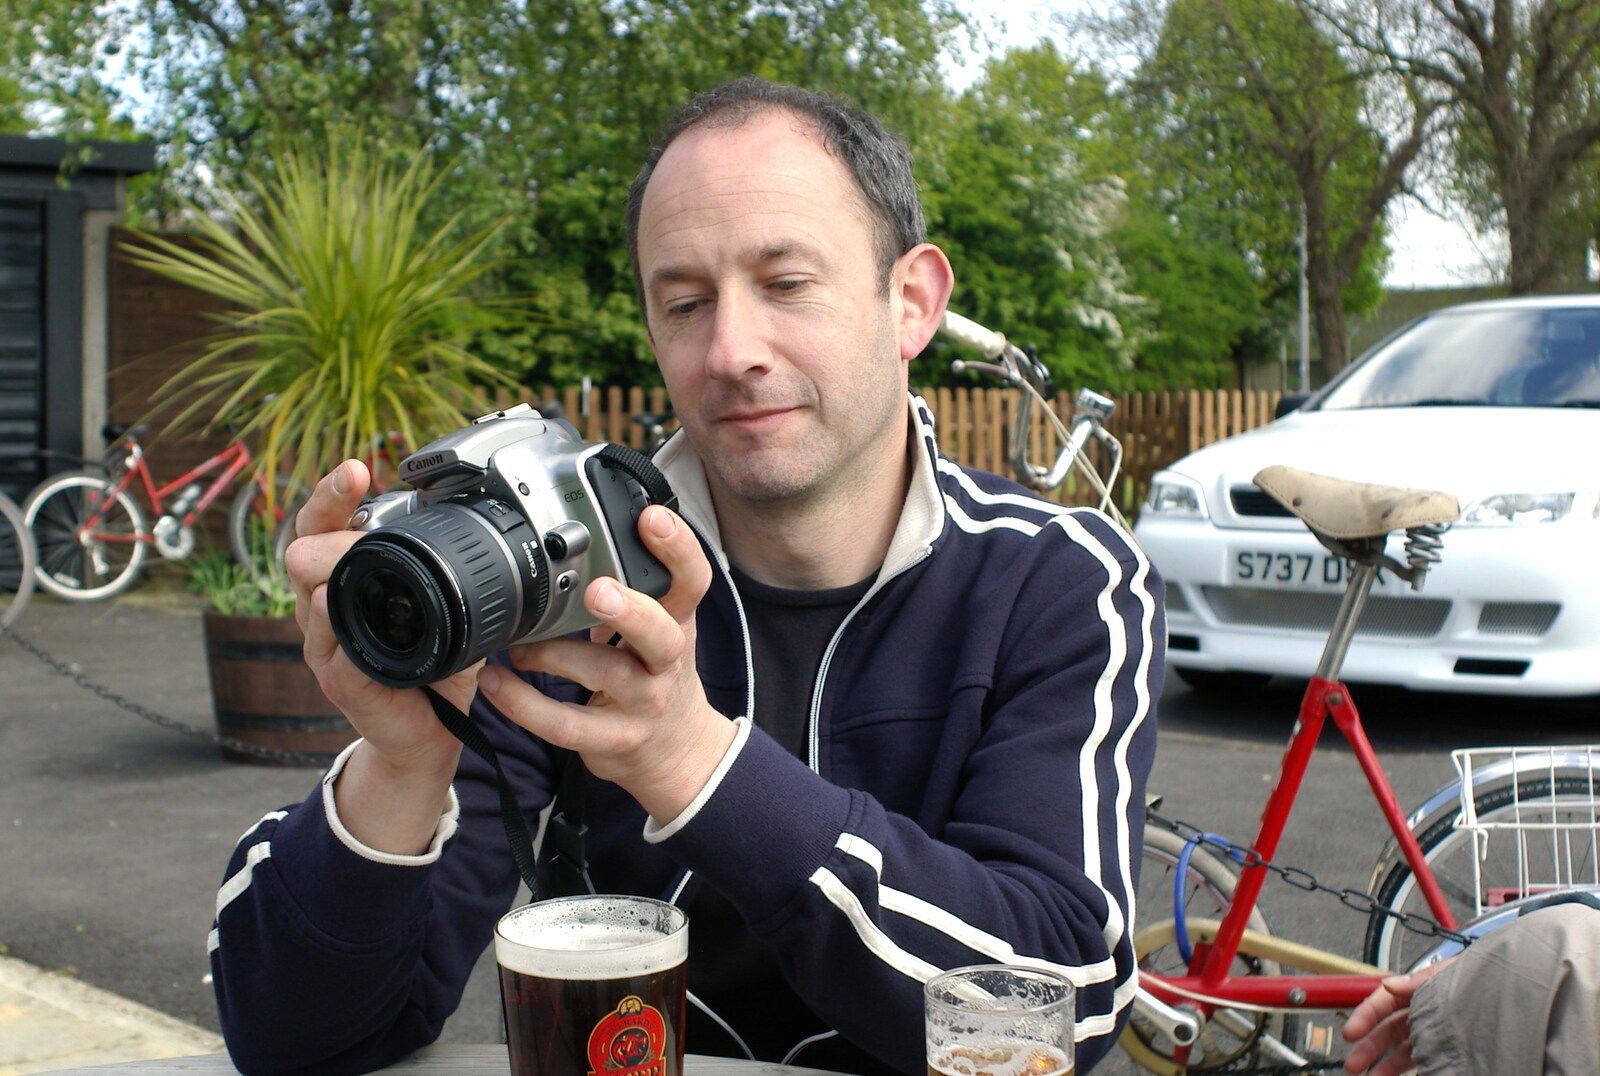 DH checks his shots from The BSCC Weekend Trip to Rutland Water, Empingham, Rutland - 14th May 2005